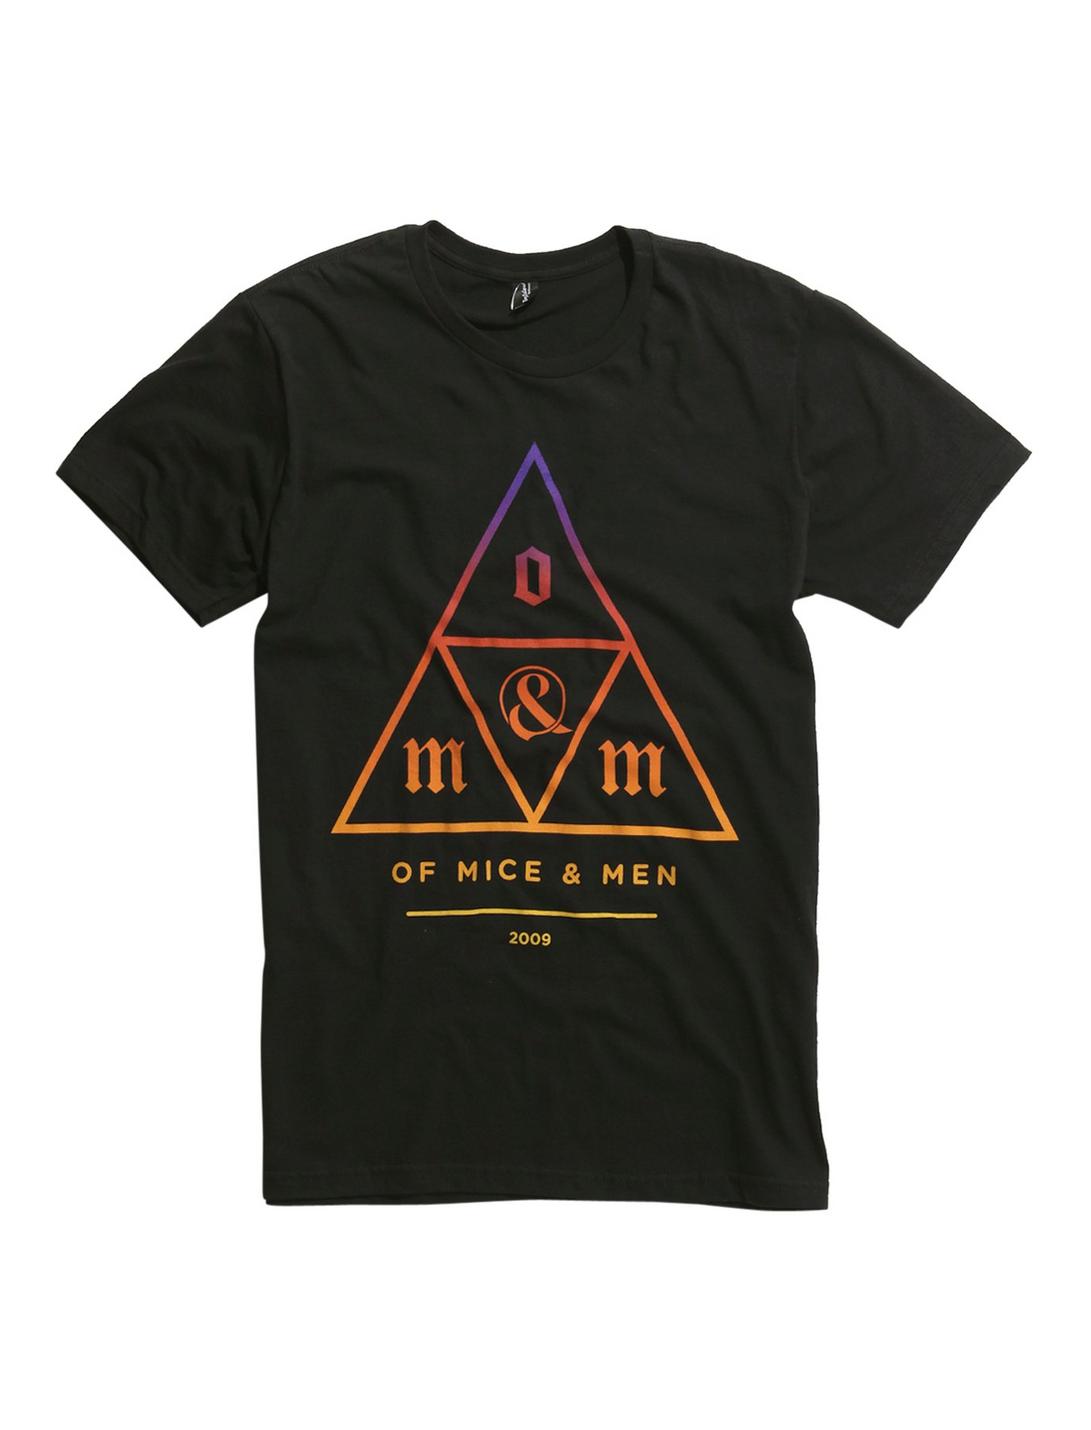 Plus Size Of Mice & Men Gradient Triangle Logo T-Shirt, BLACK, hi-res